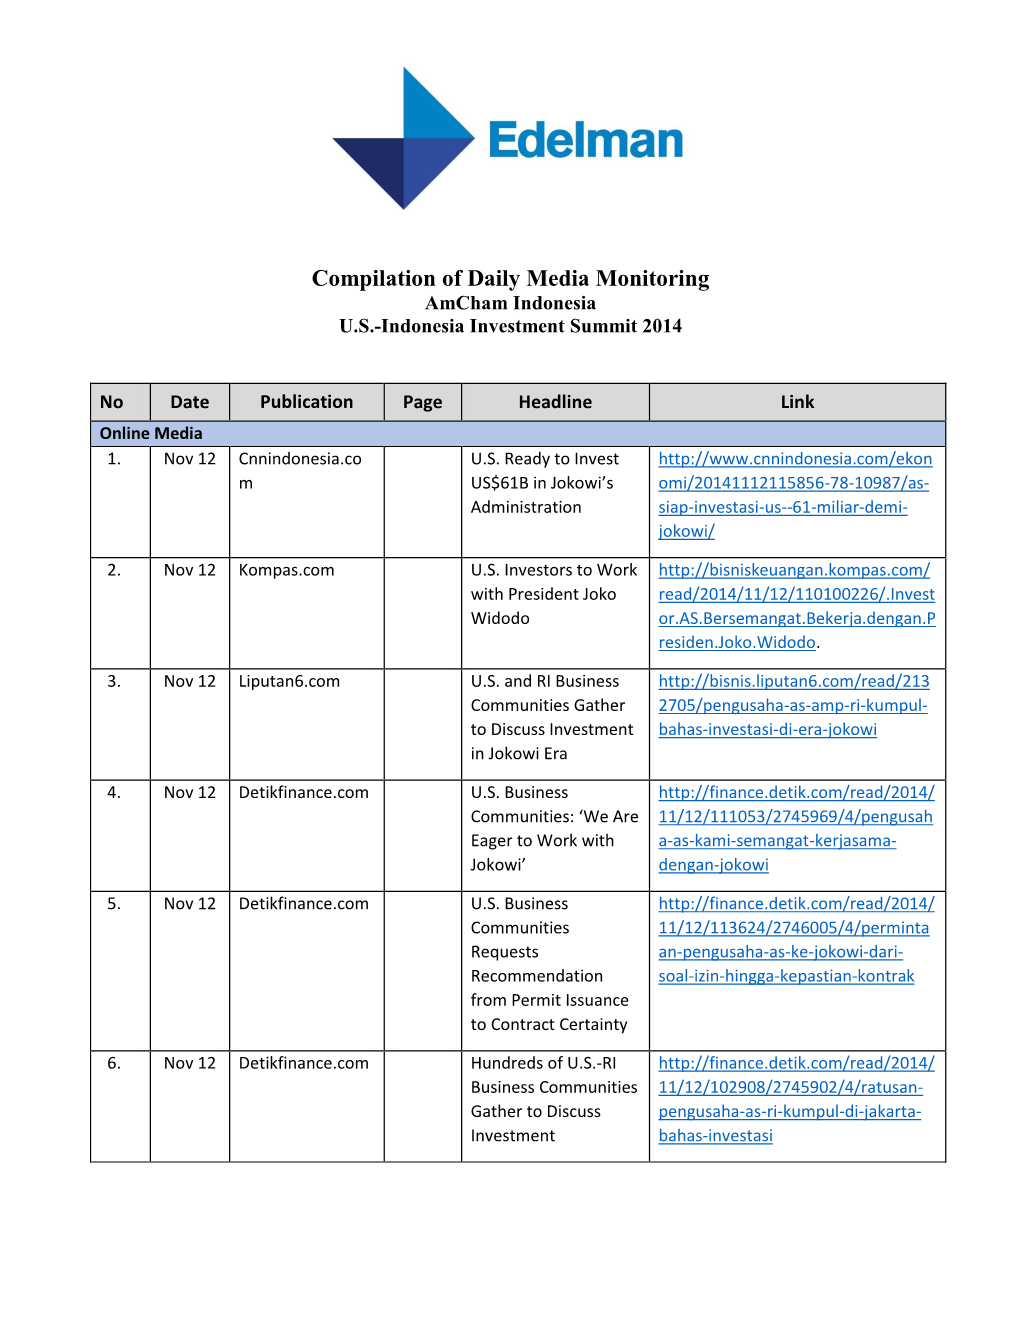 Compilation of Daily Media Monitoring Amcham Indonesia U.S.-Indonesia Investment Summit 2014